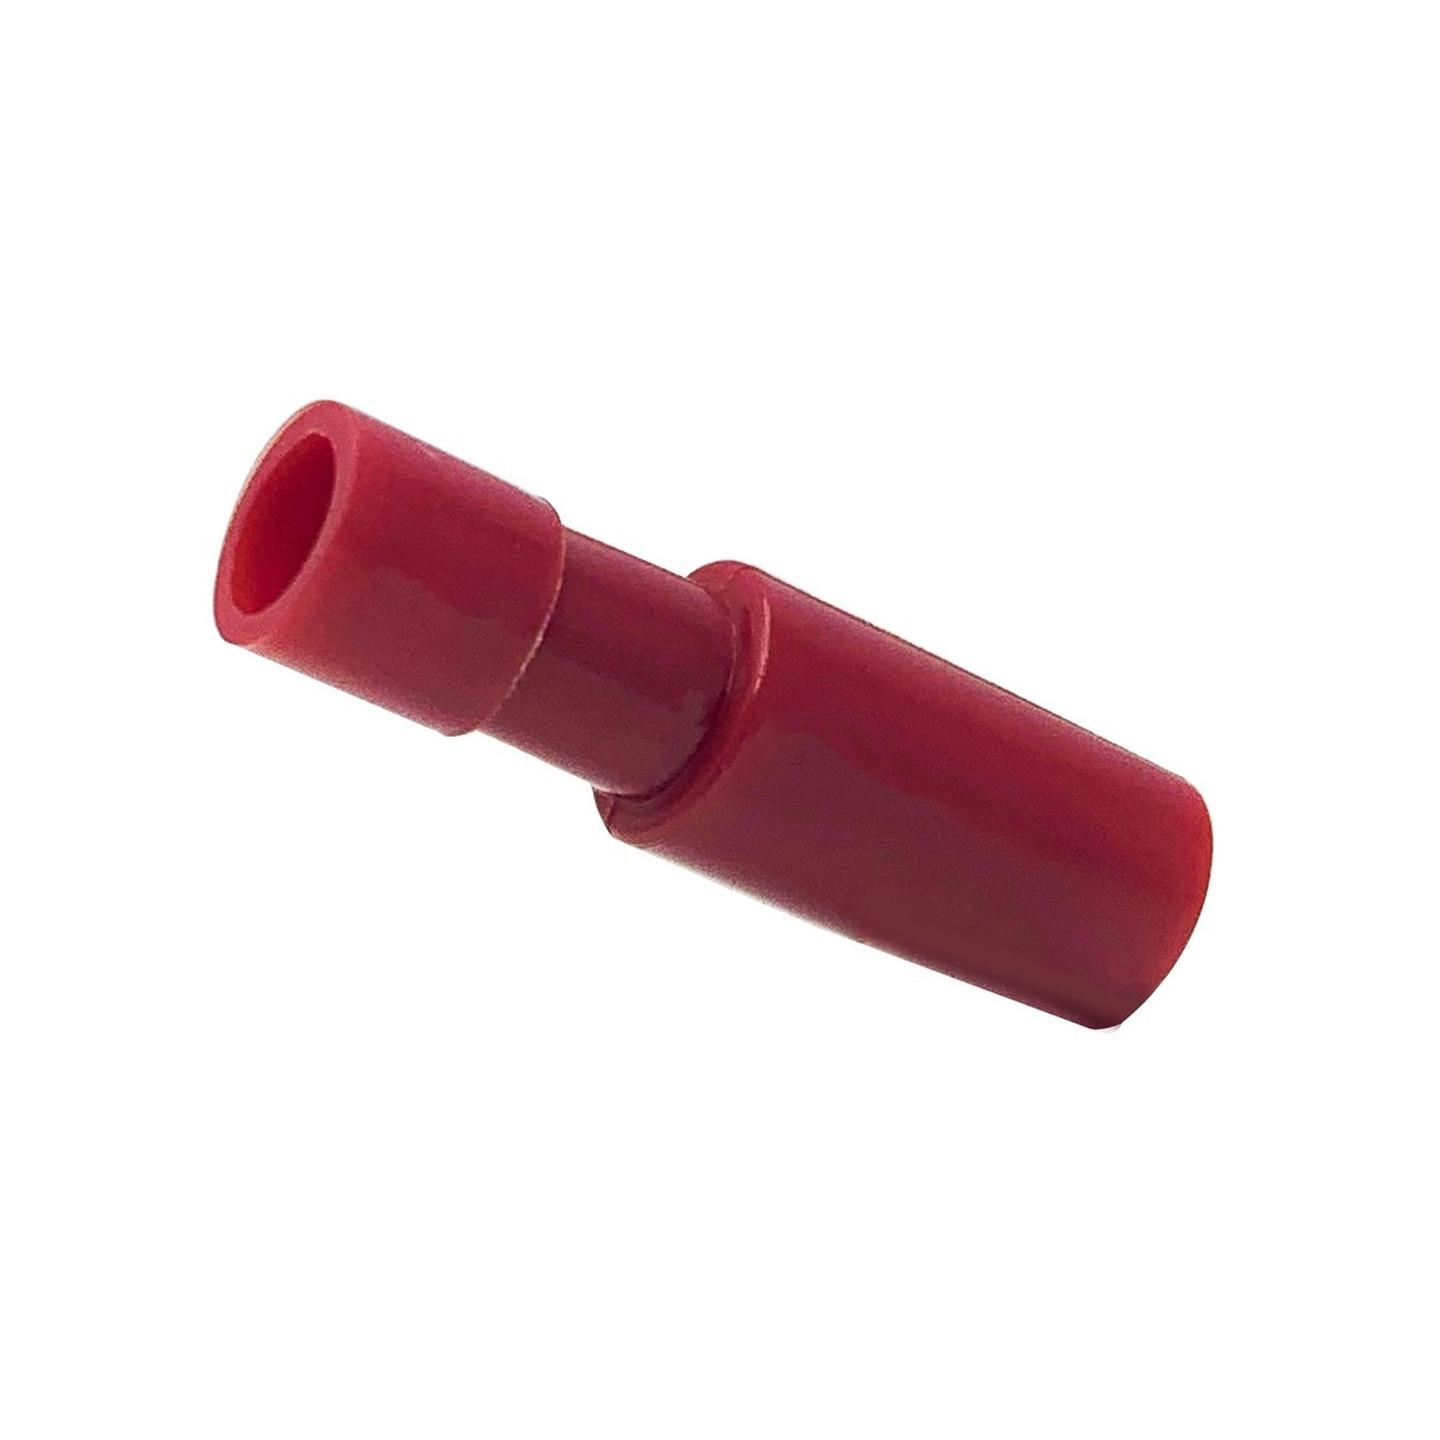 4mm Bullet Female - Red - Pack of 50